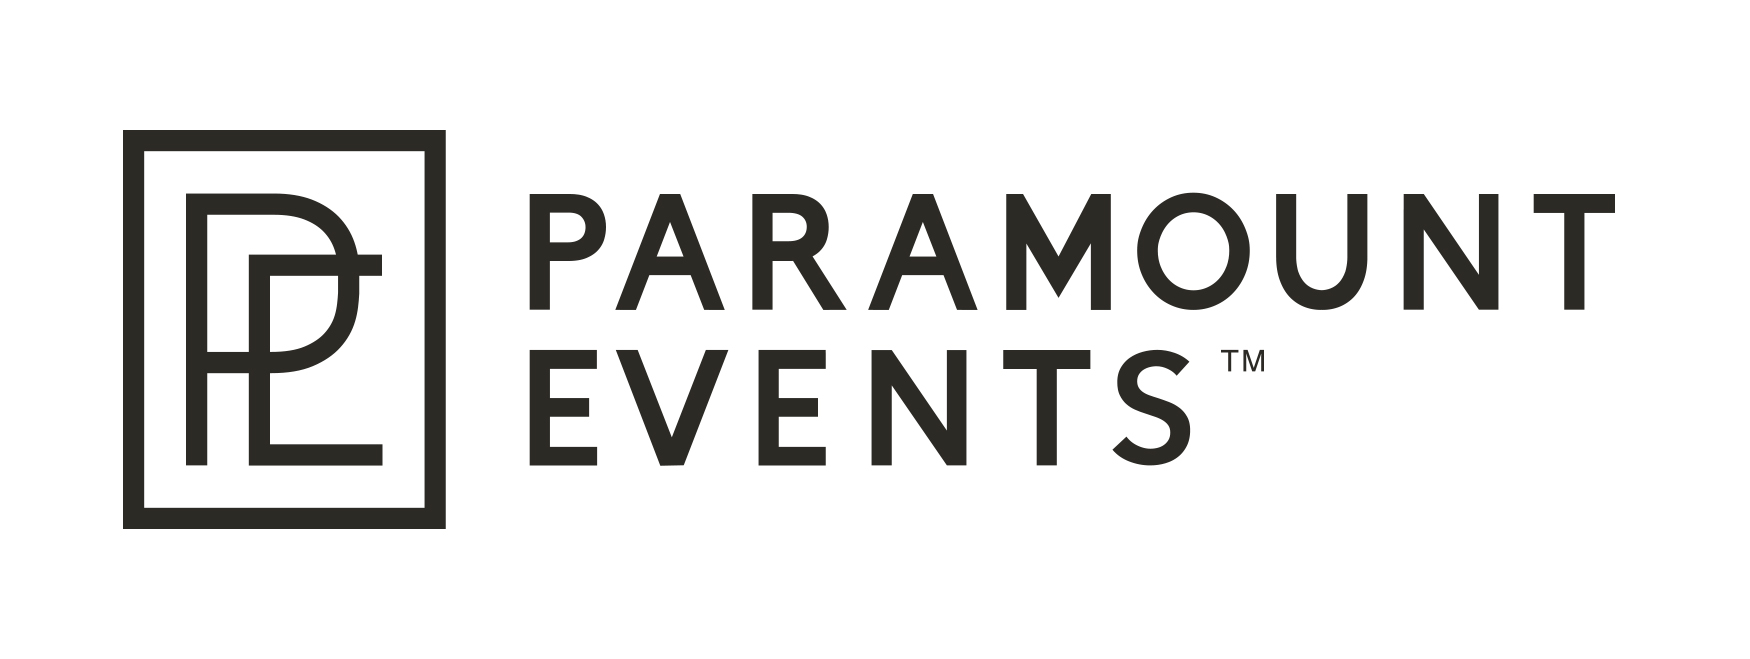 Paramount Events - Logo